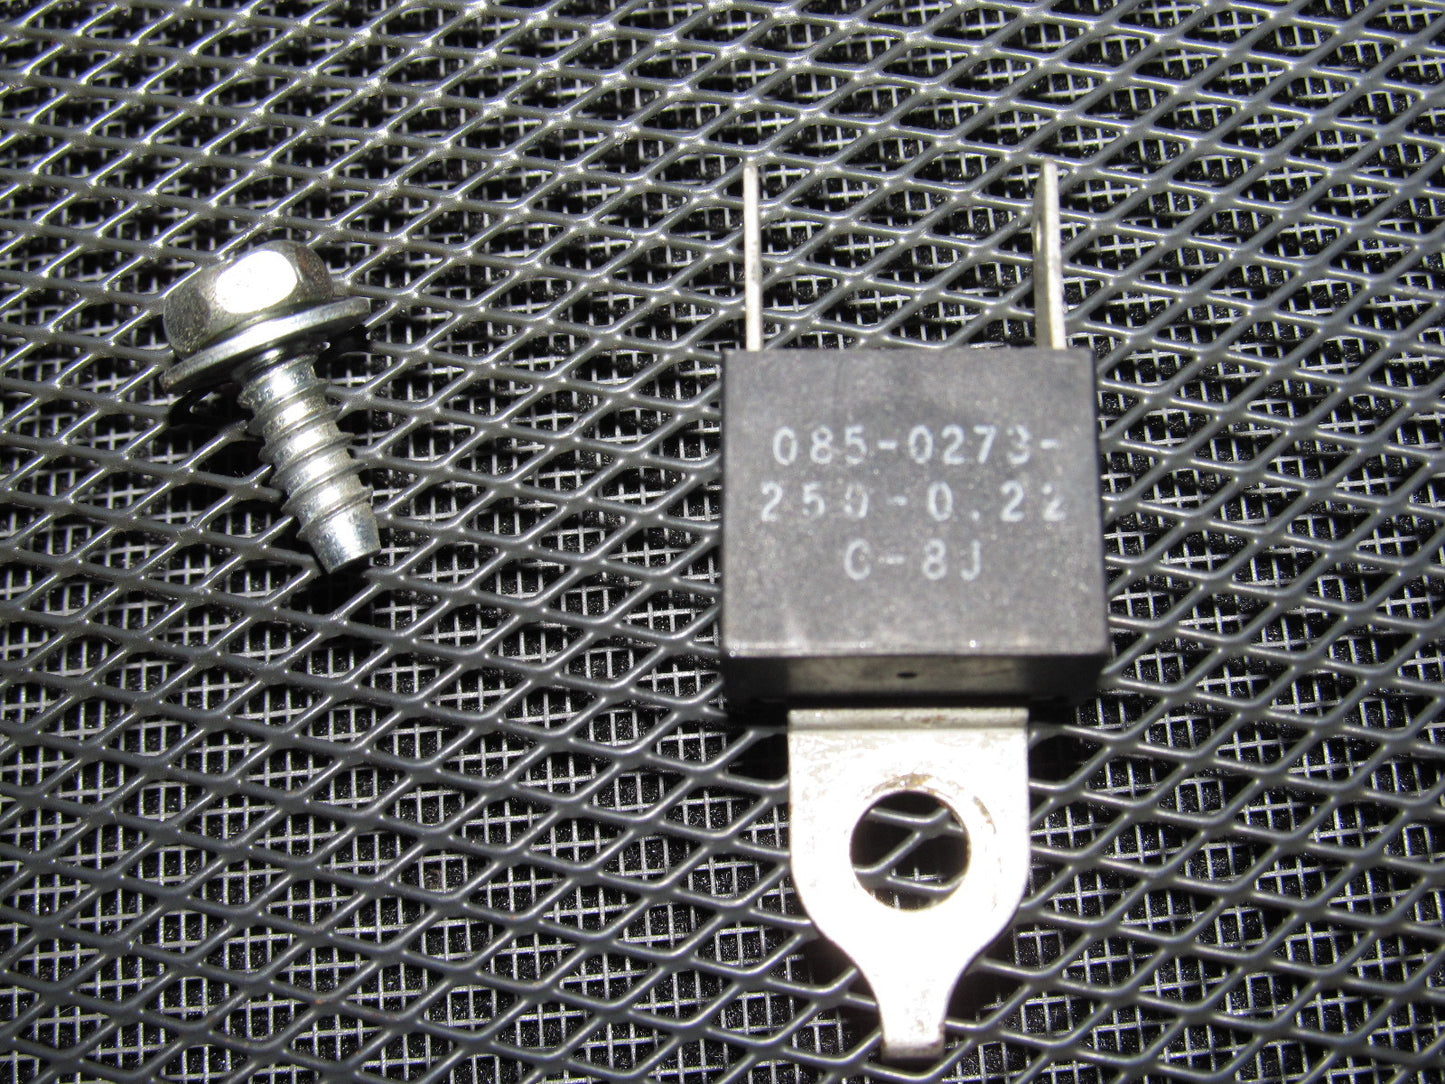 89 90 91 92 93 94 Nissan 240SX Condenser Resistor 085-0273-250-0.22 C-8J